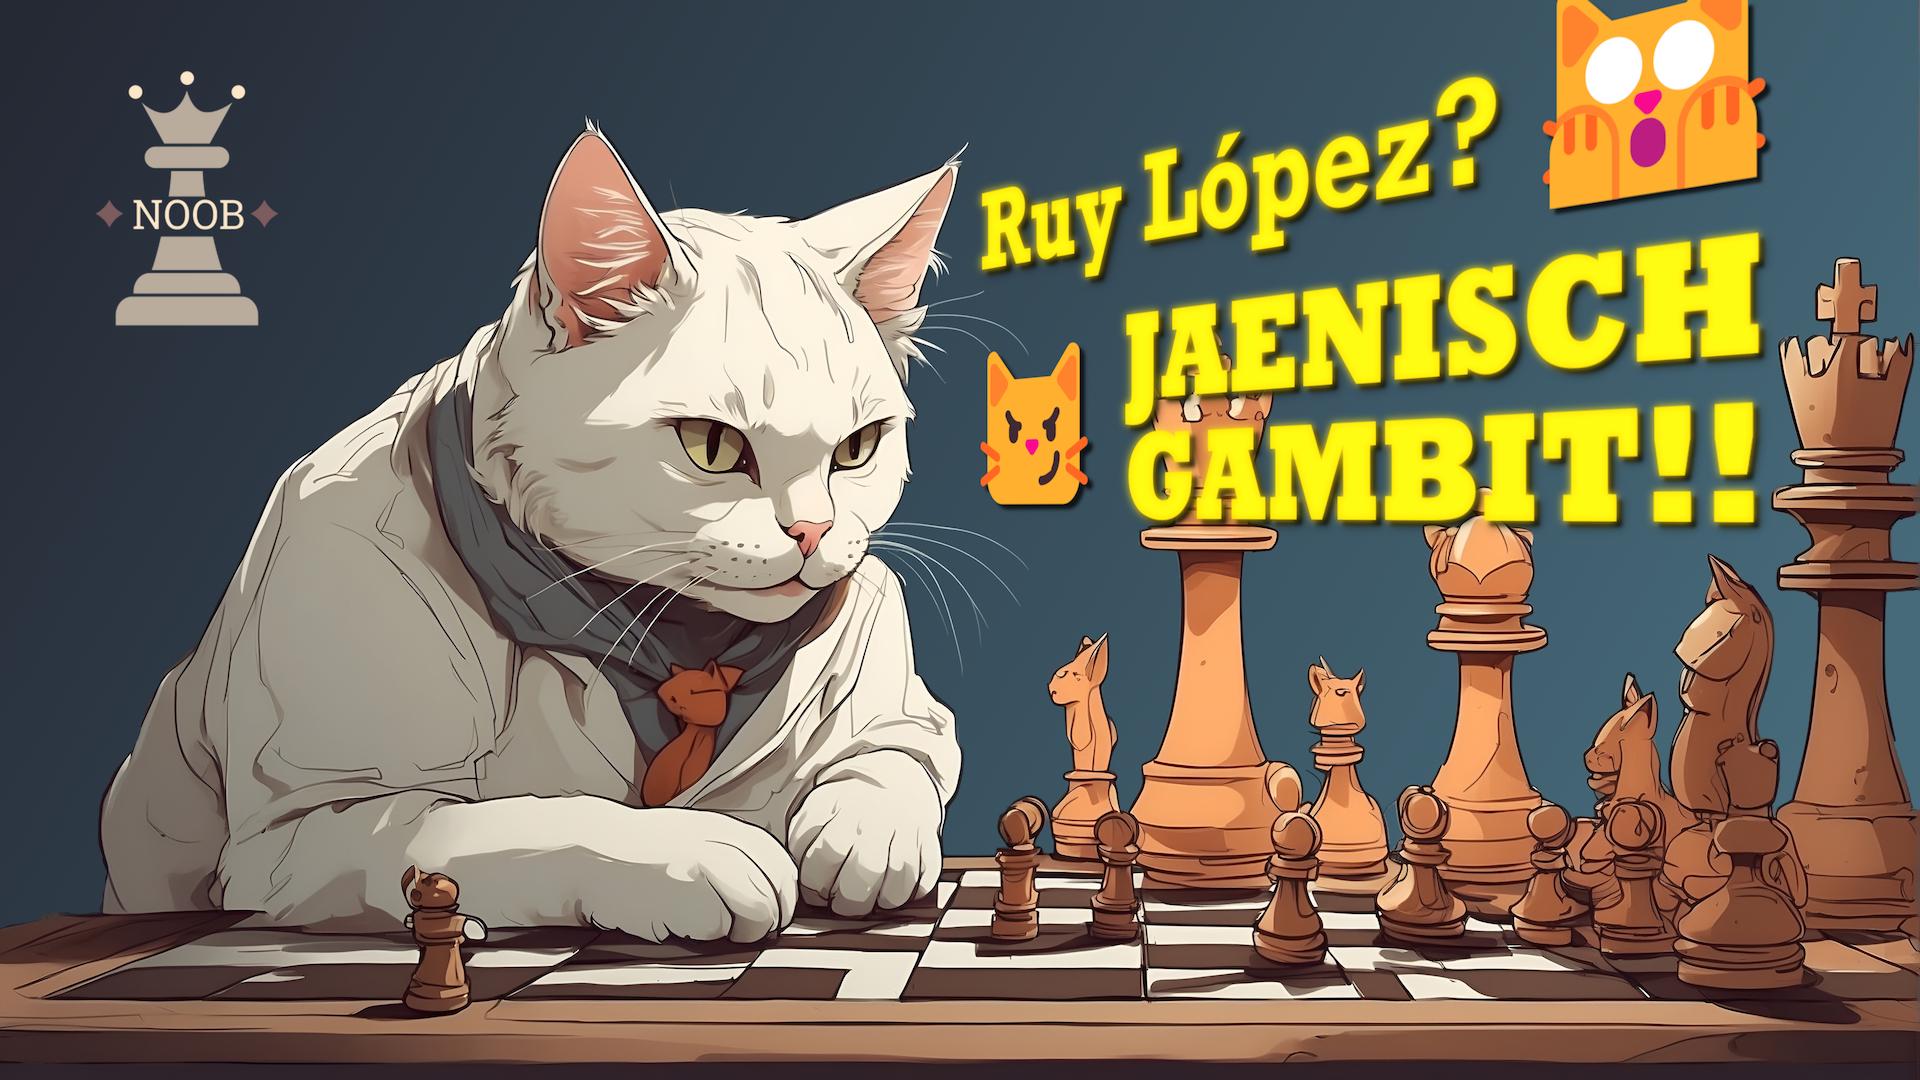 Jaenisch Gambit  DESTROY the Ruy Lopez Opening! 